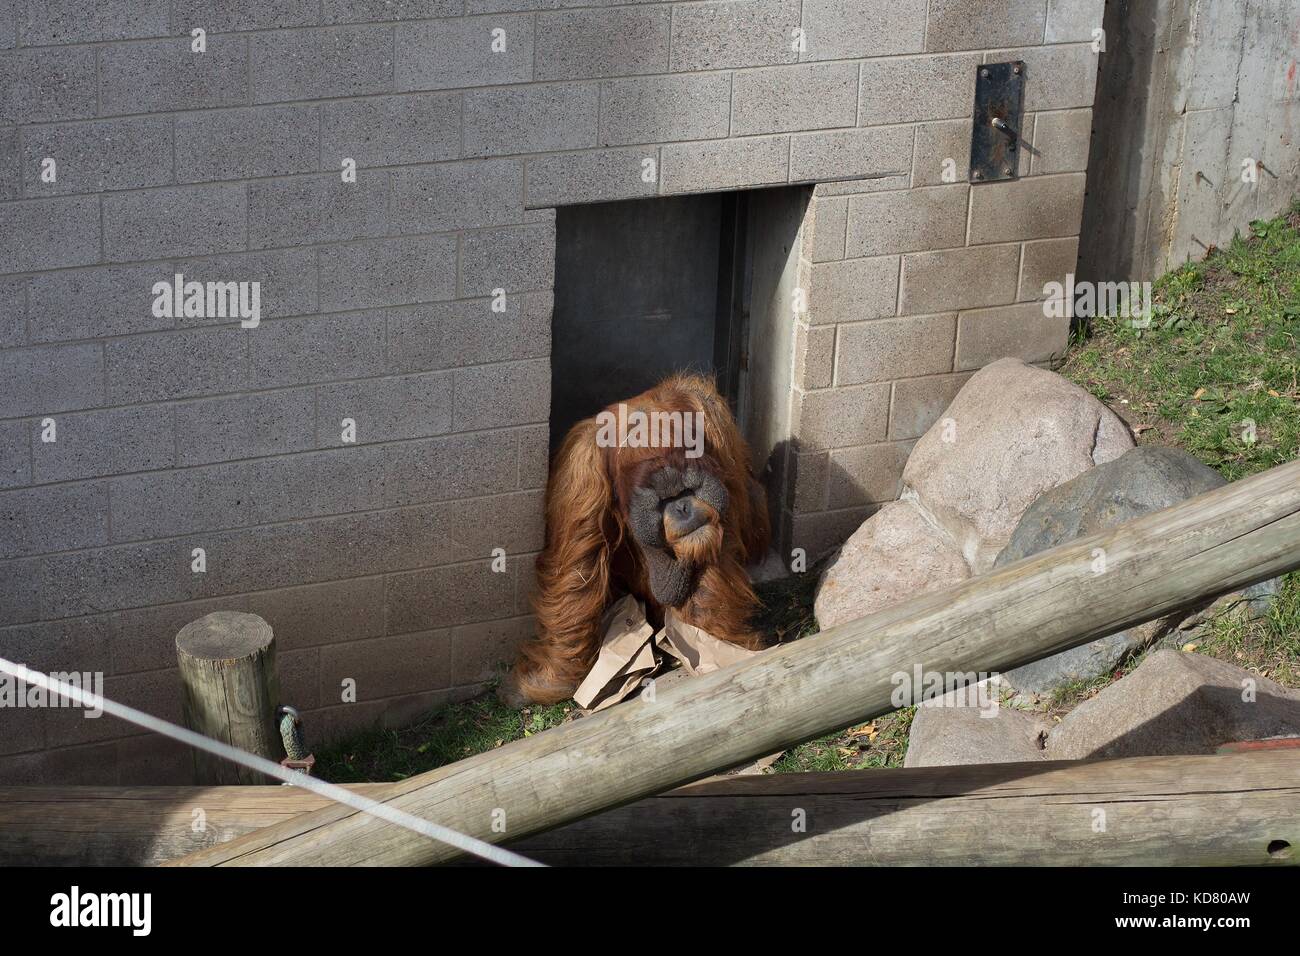 An orangutan in an outdoor enclosure in a zoo. Stock Photo